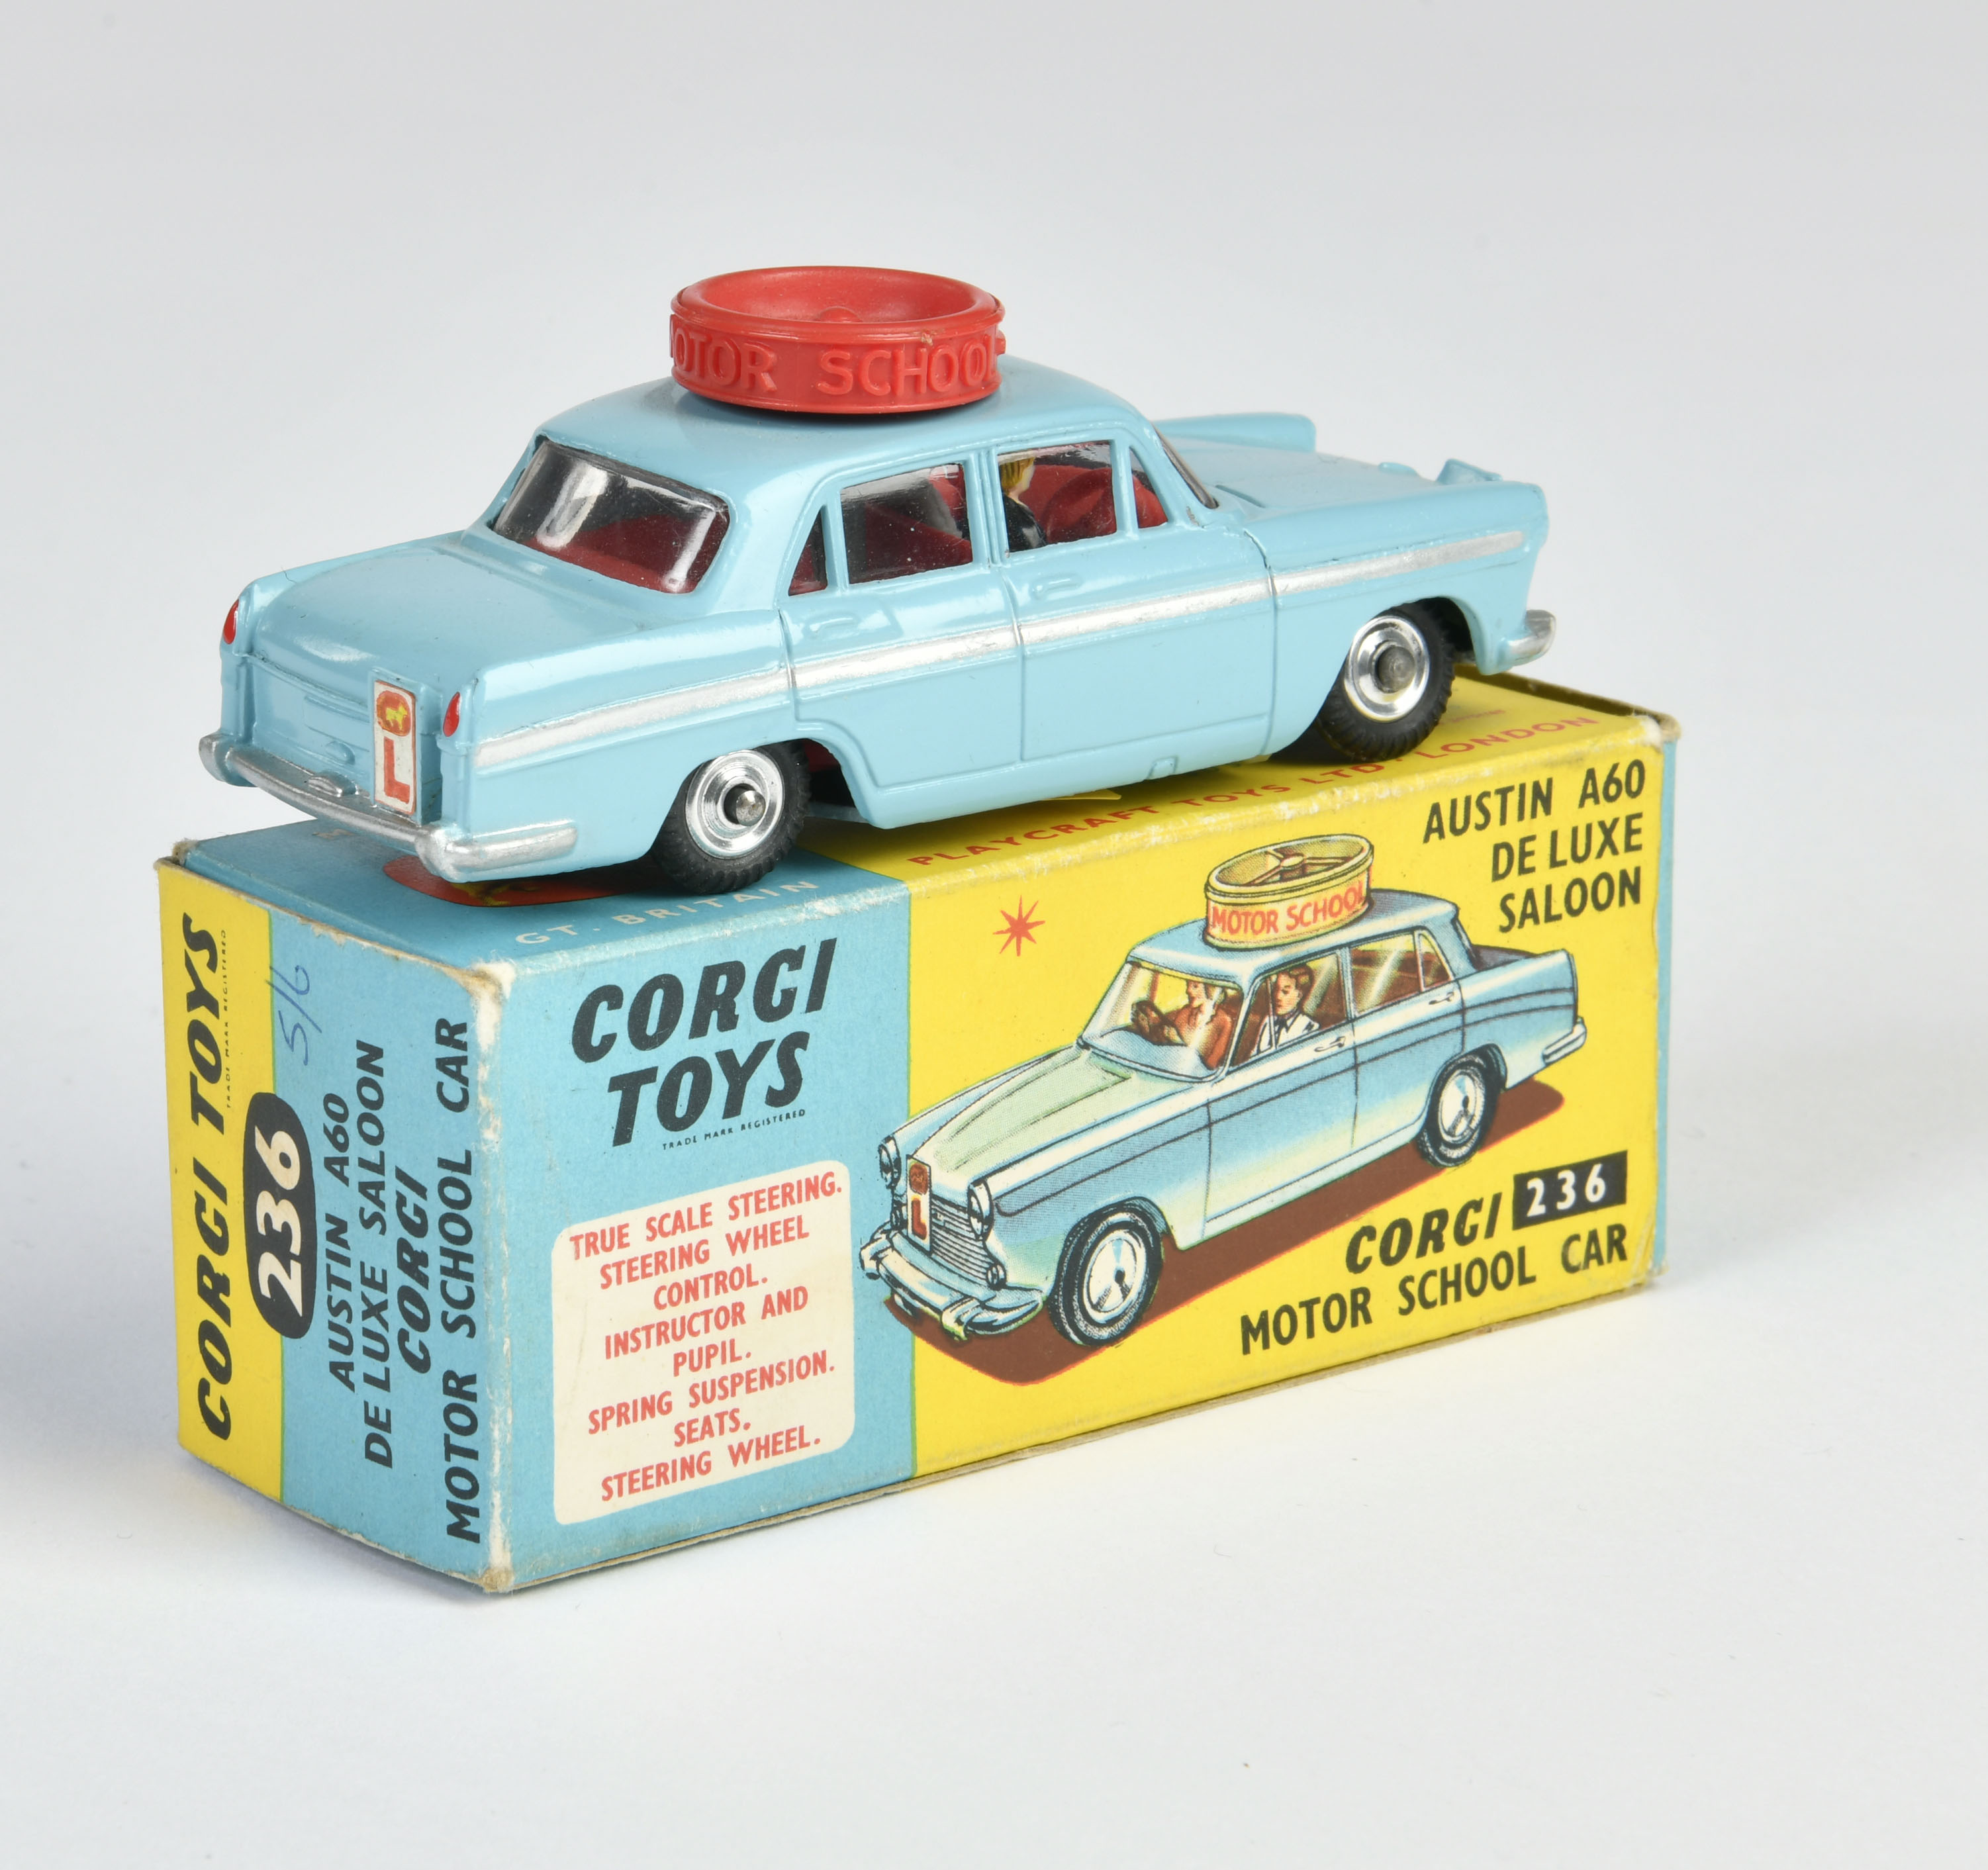 Corgi Toys, 236 Motor School Car, blue, England, 1:43, diecast, box C 1, C 1 - Image 2 of 2